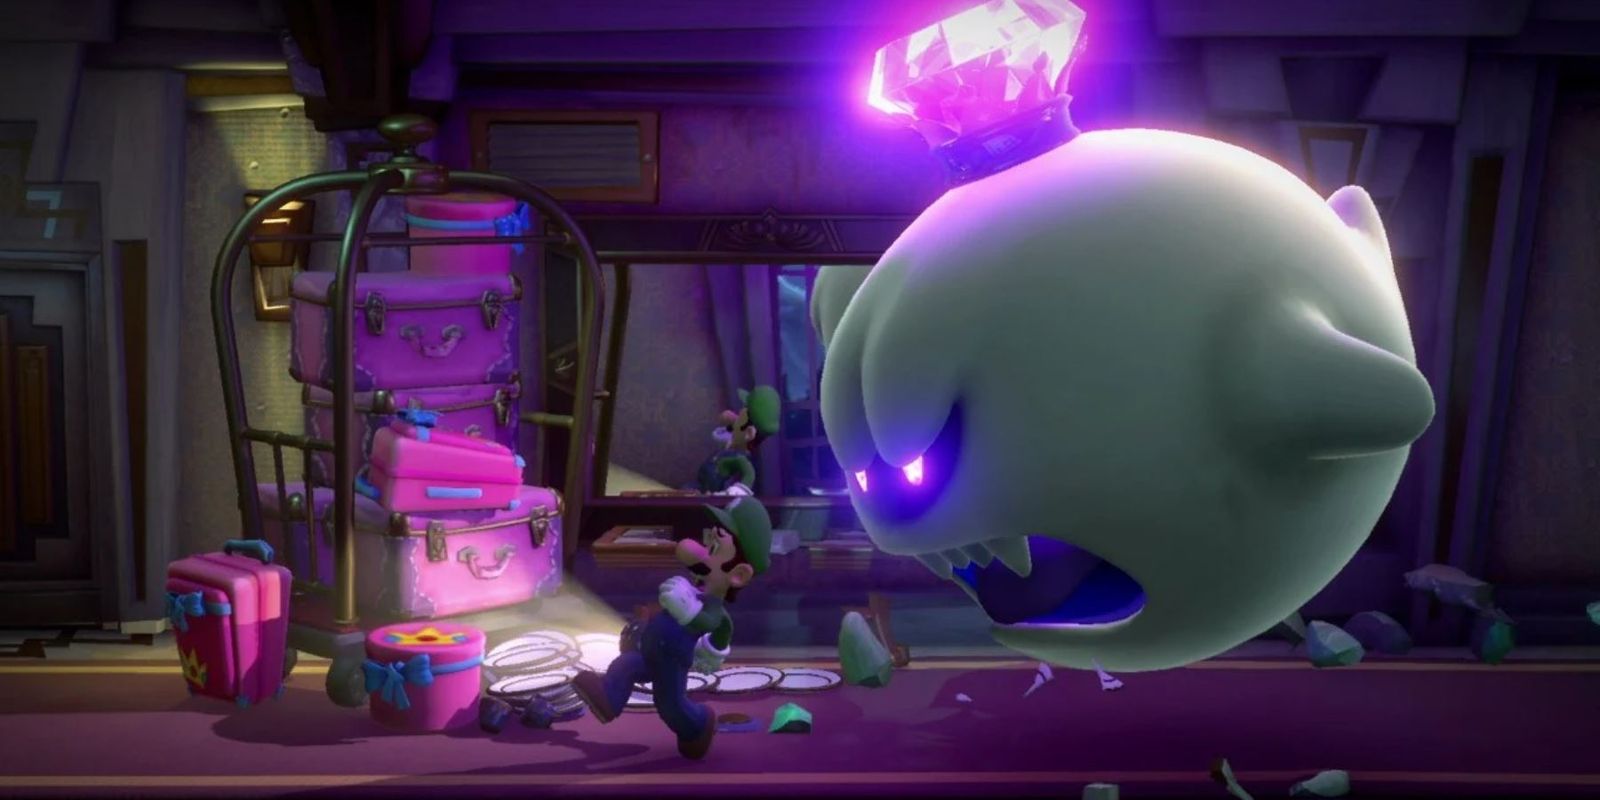 Luigi's Mansion 3 screenshot with Luigi running past some luggage with King Boo chasing him.